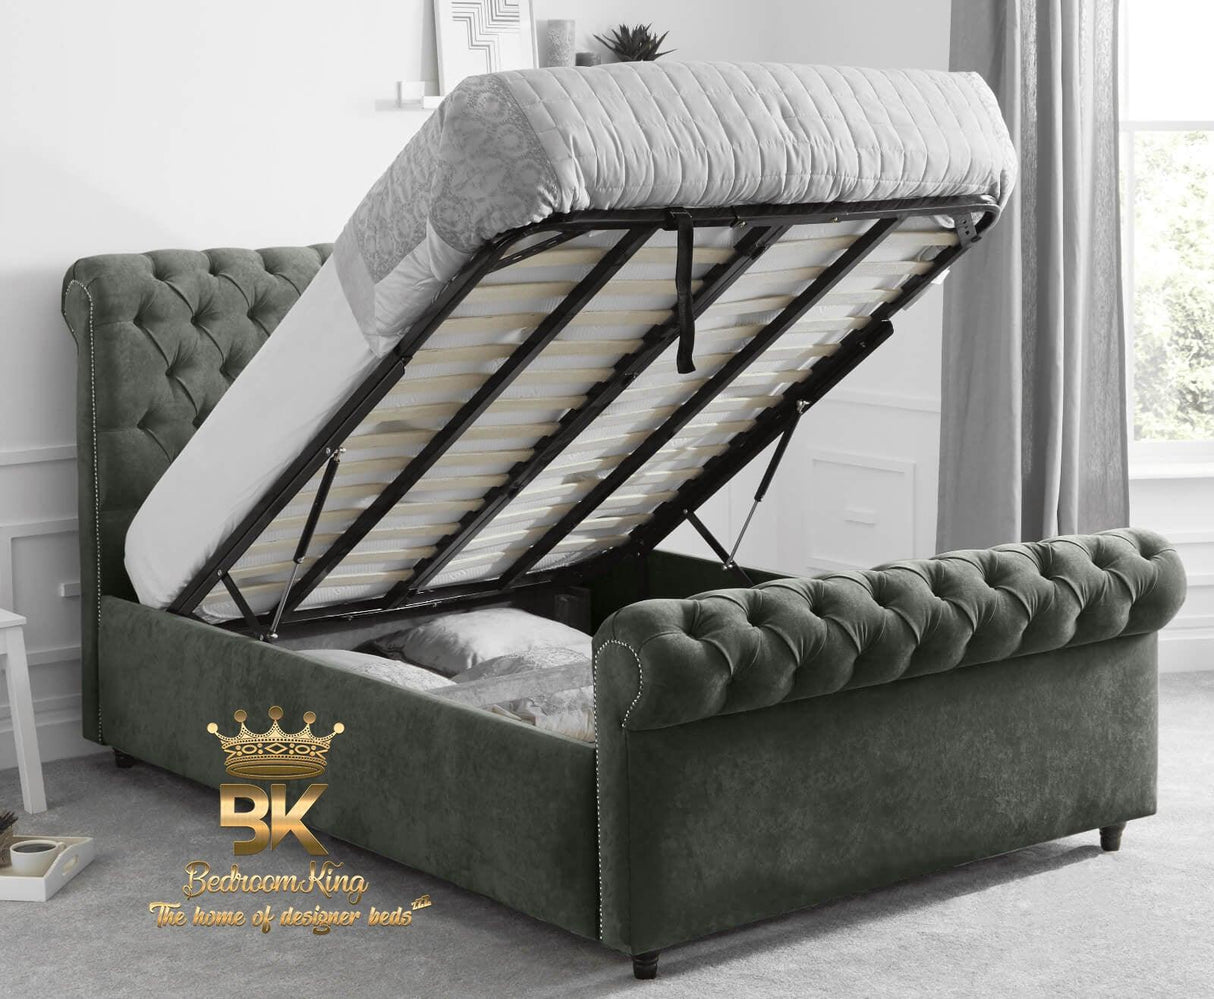 Sleigh ottoman storage bed frame in grey plush velvet